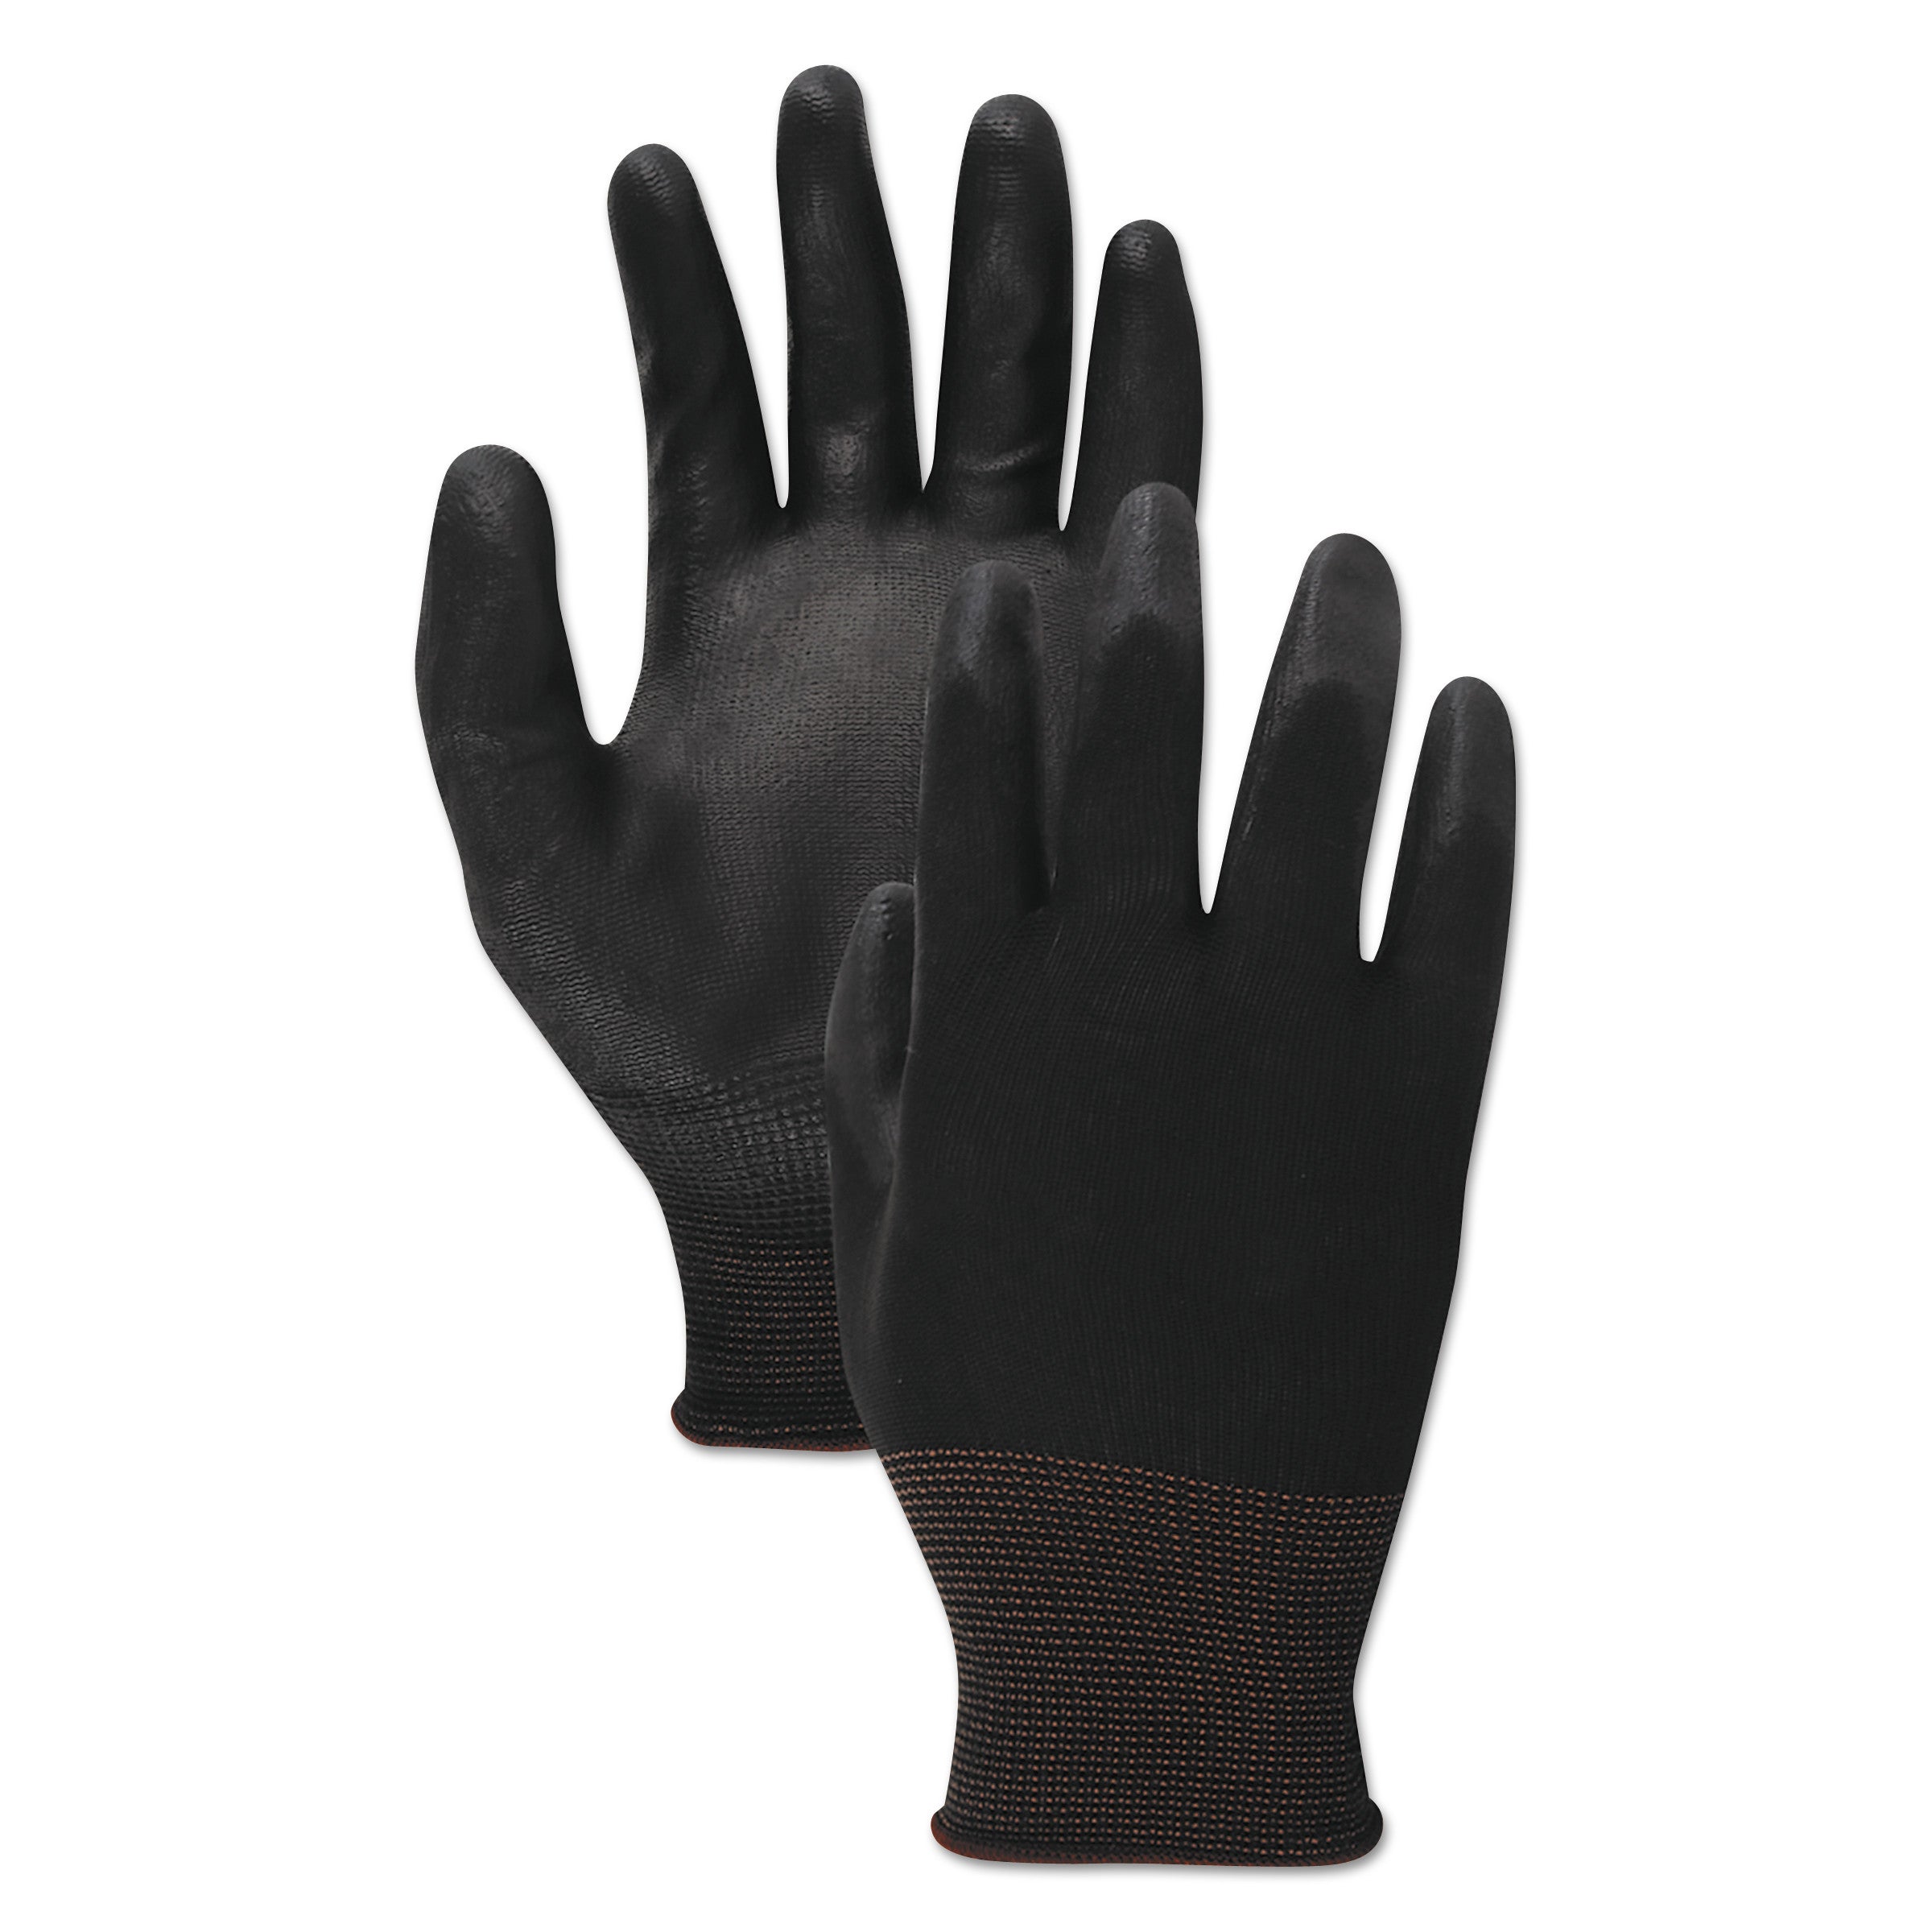 palm-coated-cut-resistant-hppe-glove-salt-and-pepper-black-size-10-x-large-dozen_bwk0002910 - 1